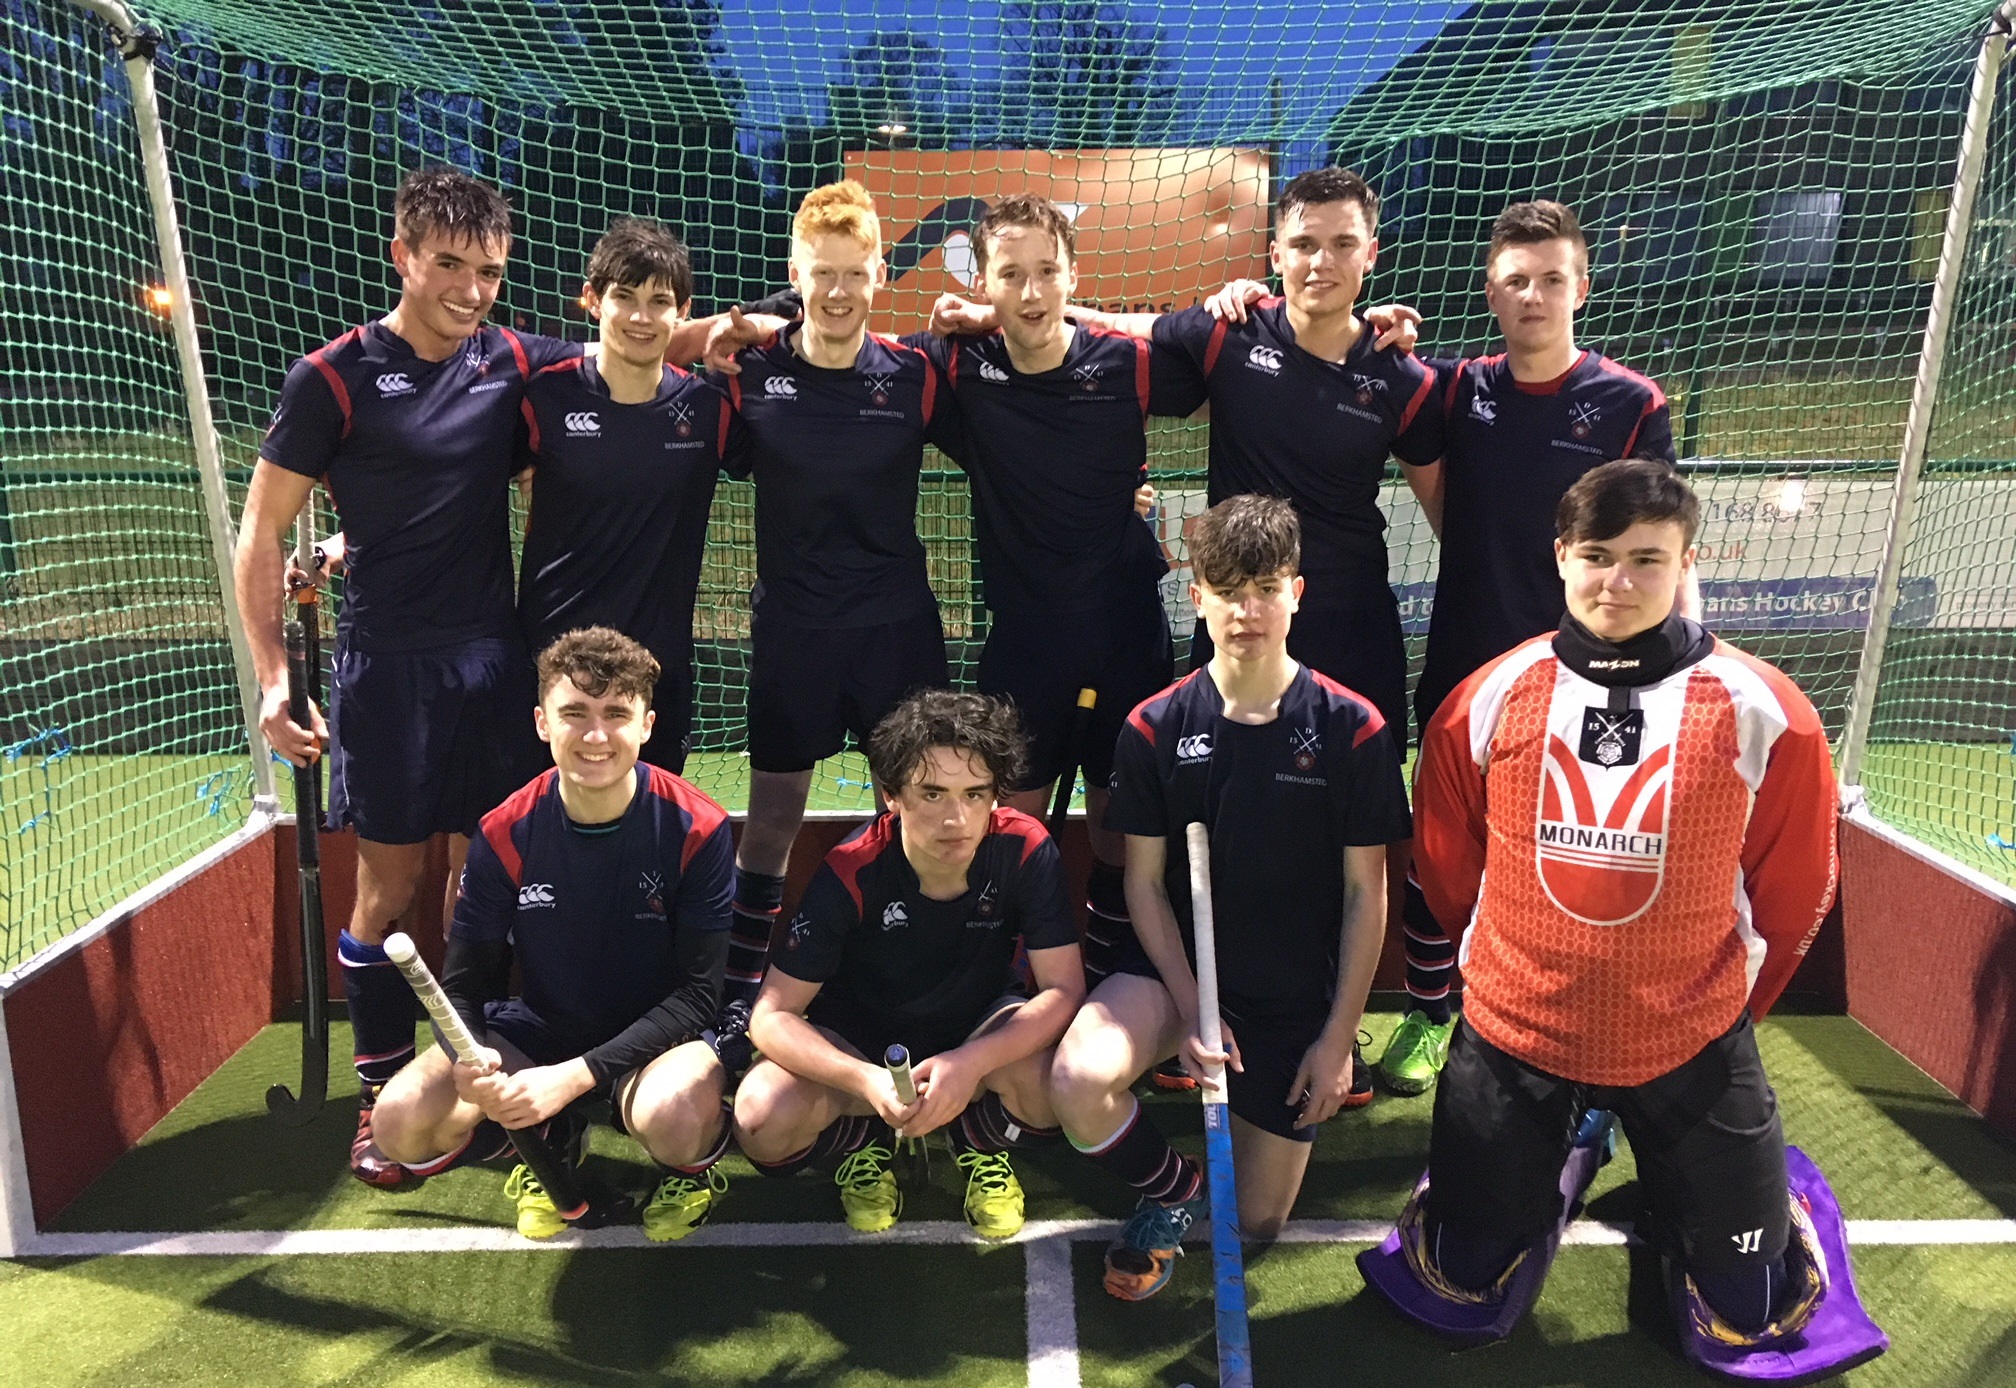 Boys’ battling display at St Albans Hockey tournament